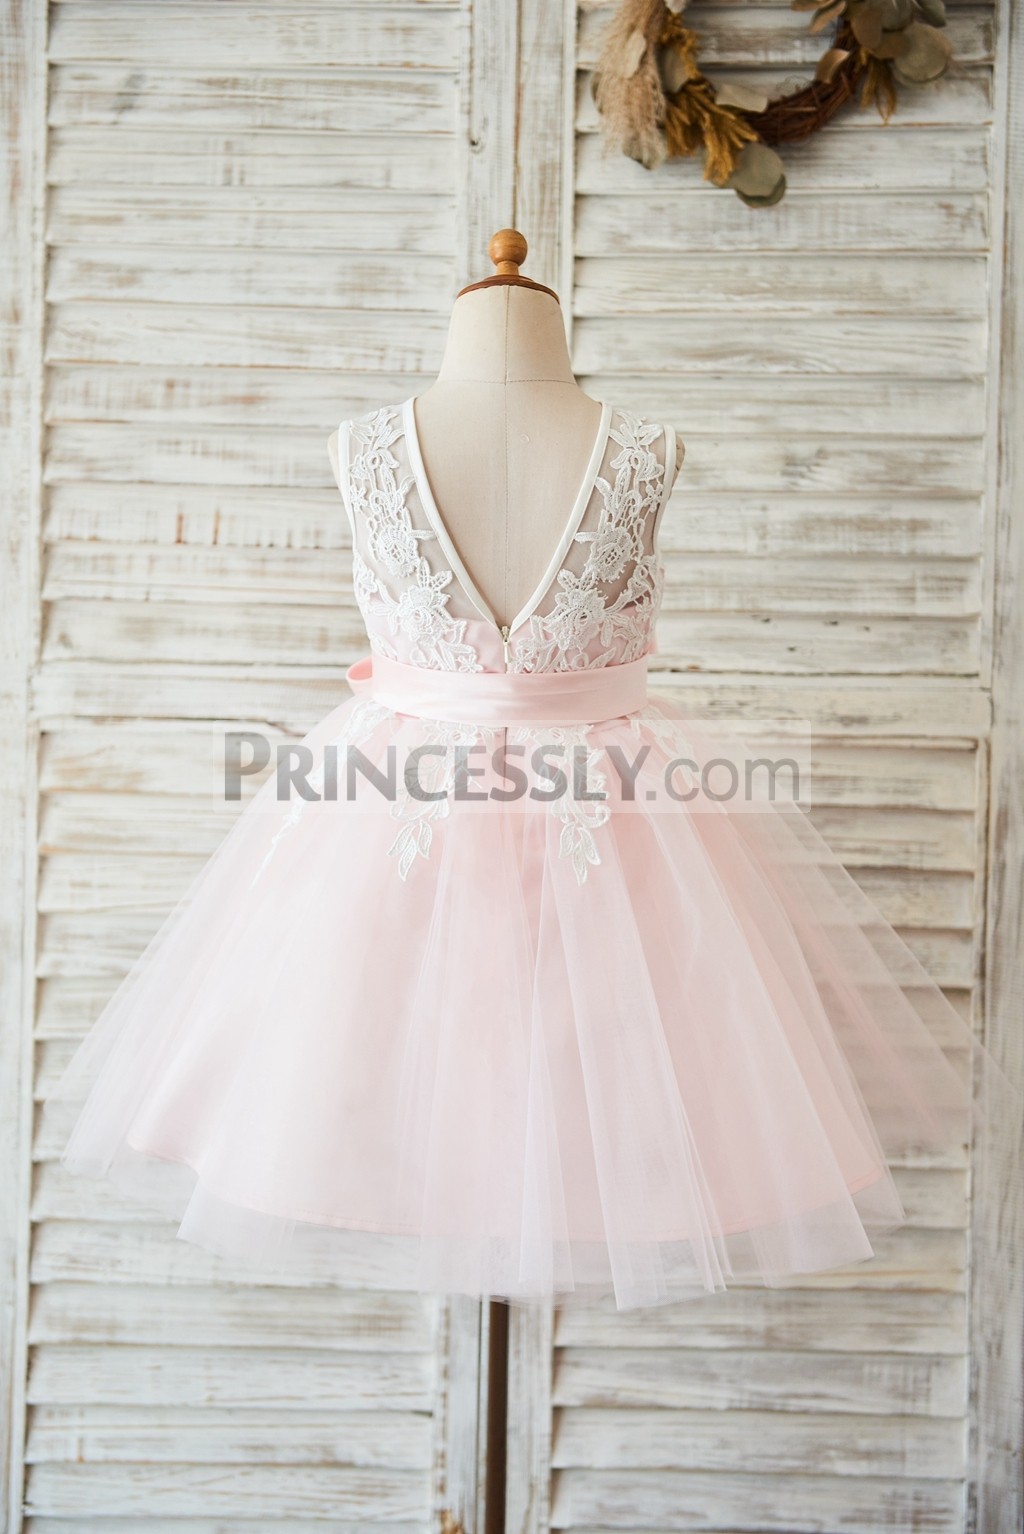 Princess deep V back pink tulle wedding baby girl dress